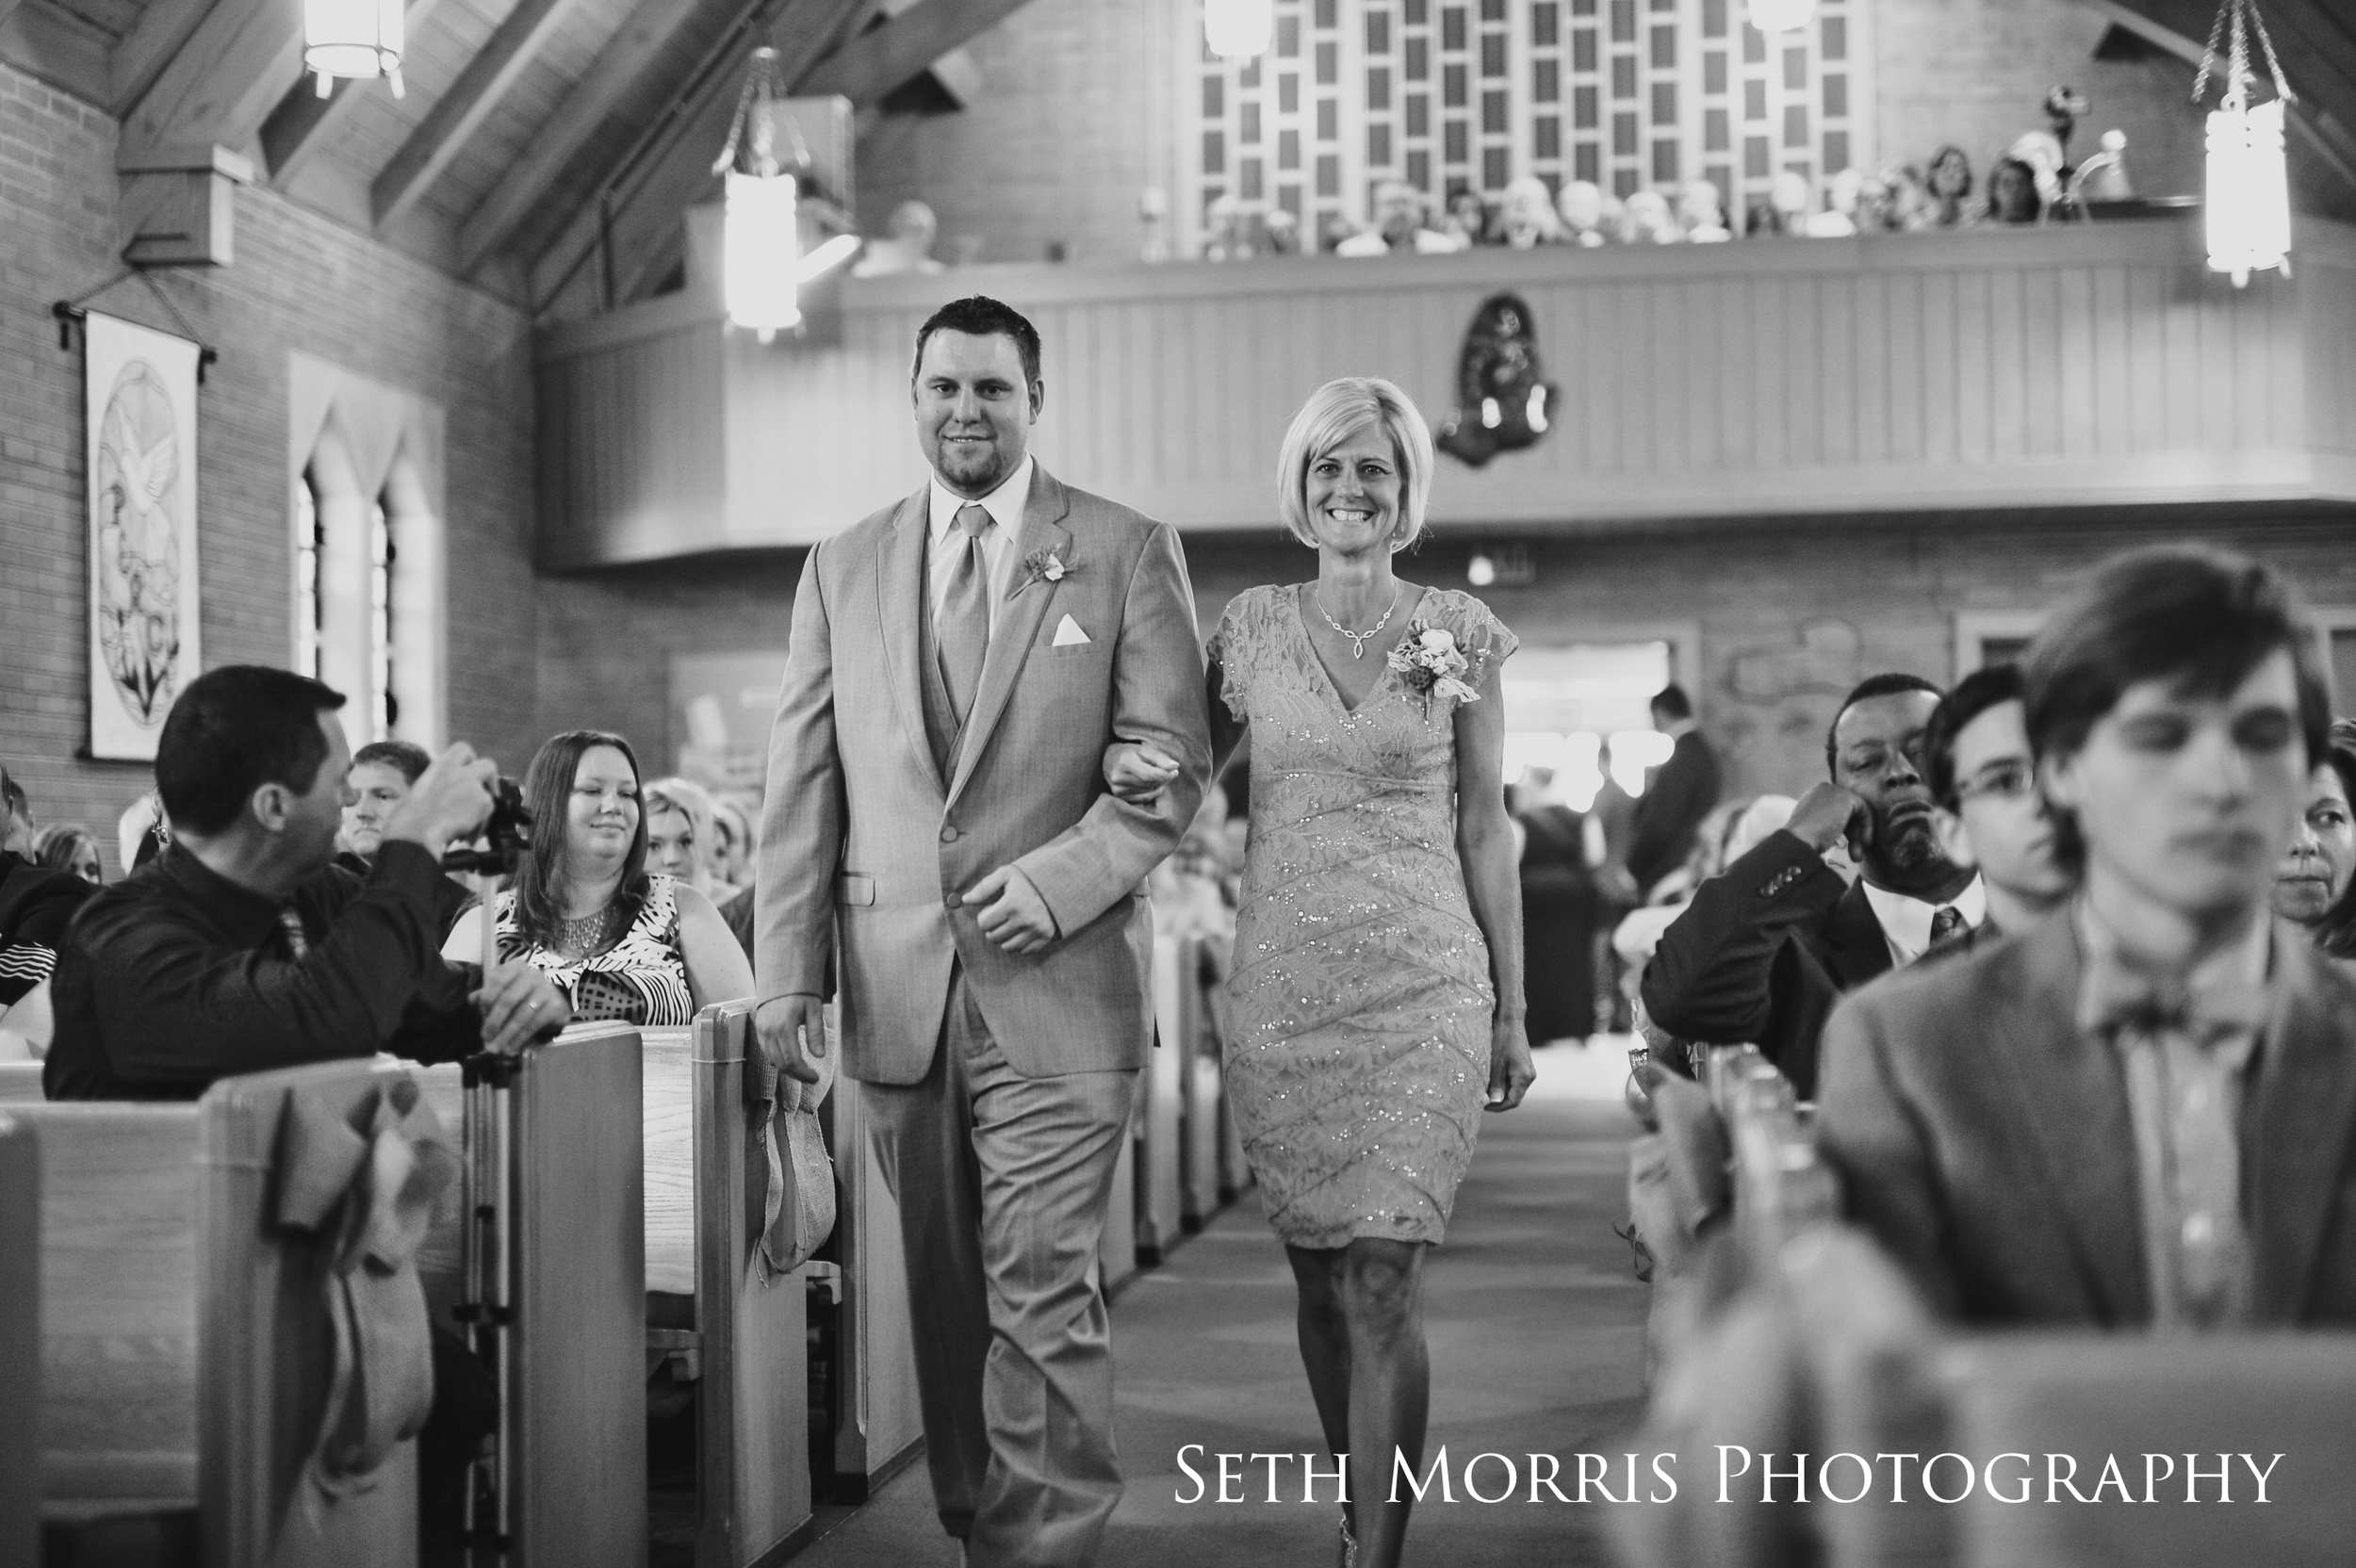 hornbaker-barn-wedding-photo-princeton-photographer-13.jpg